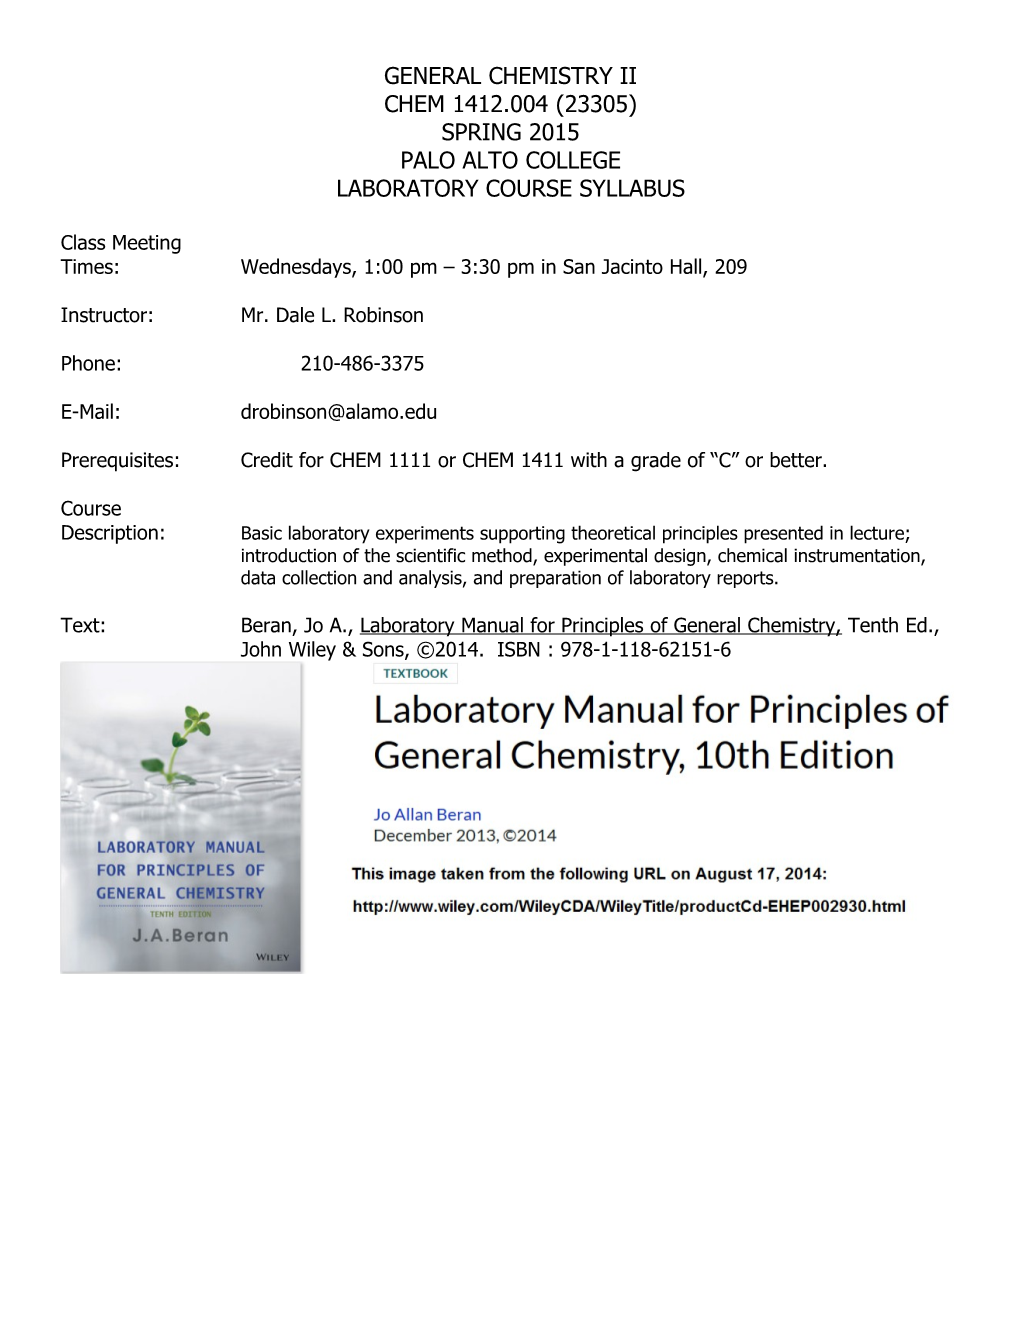 General Chemistry Laboratory I